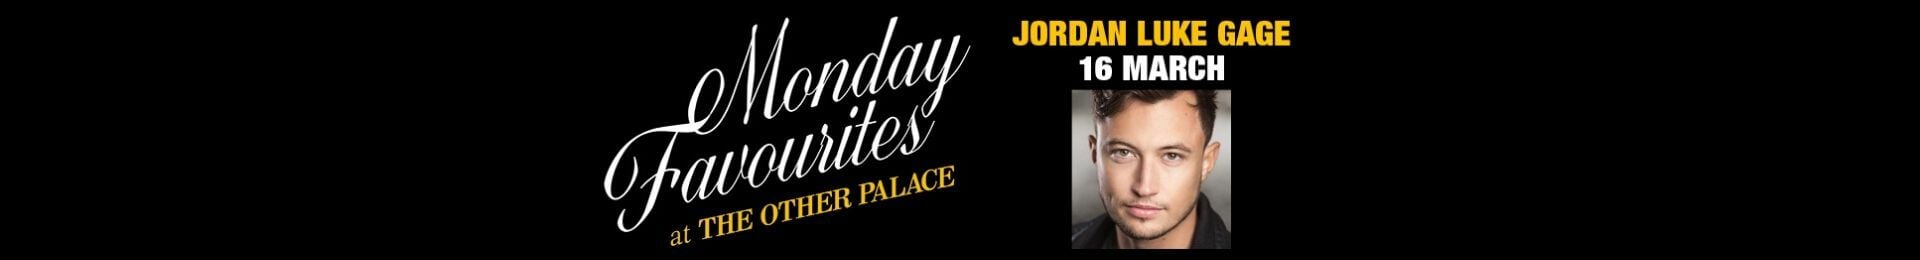 Monday Favourites at The Other Palace: Jordan Luke Gage banner image